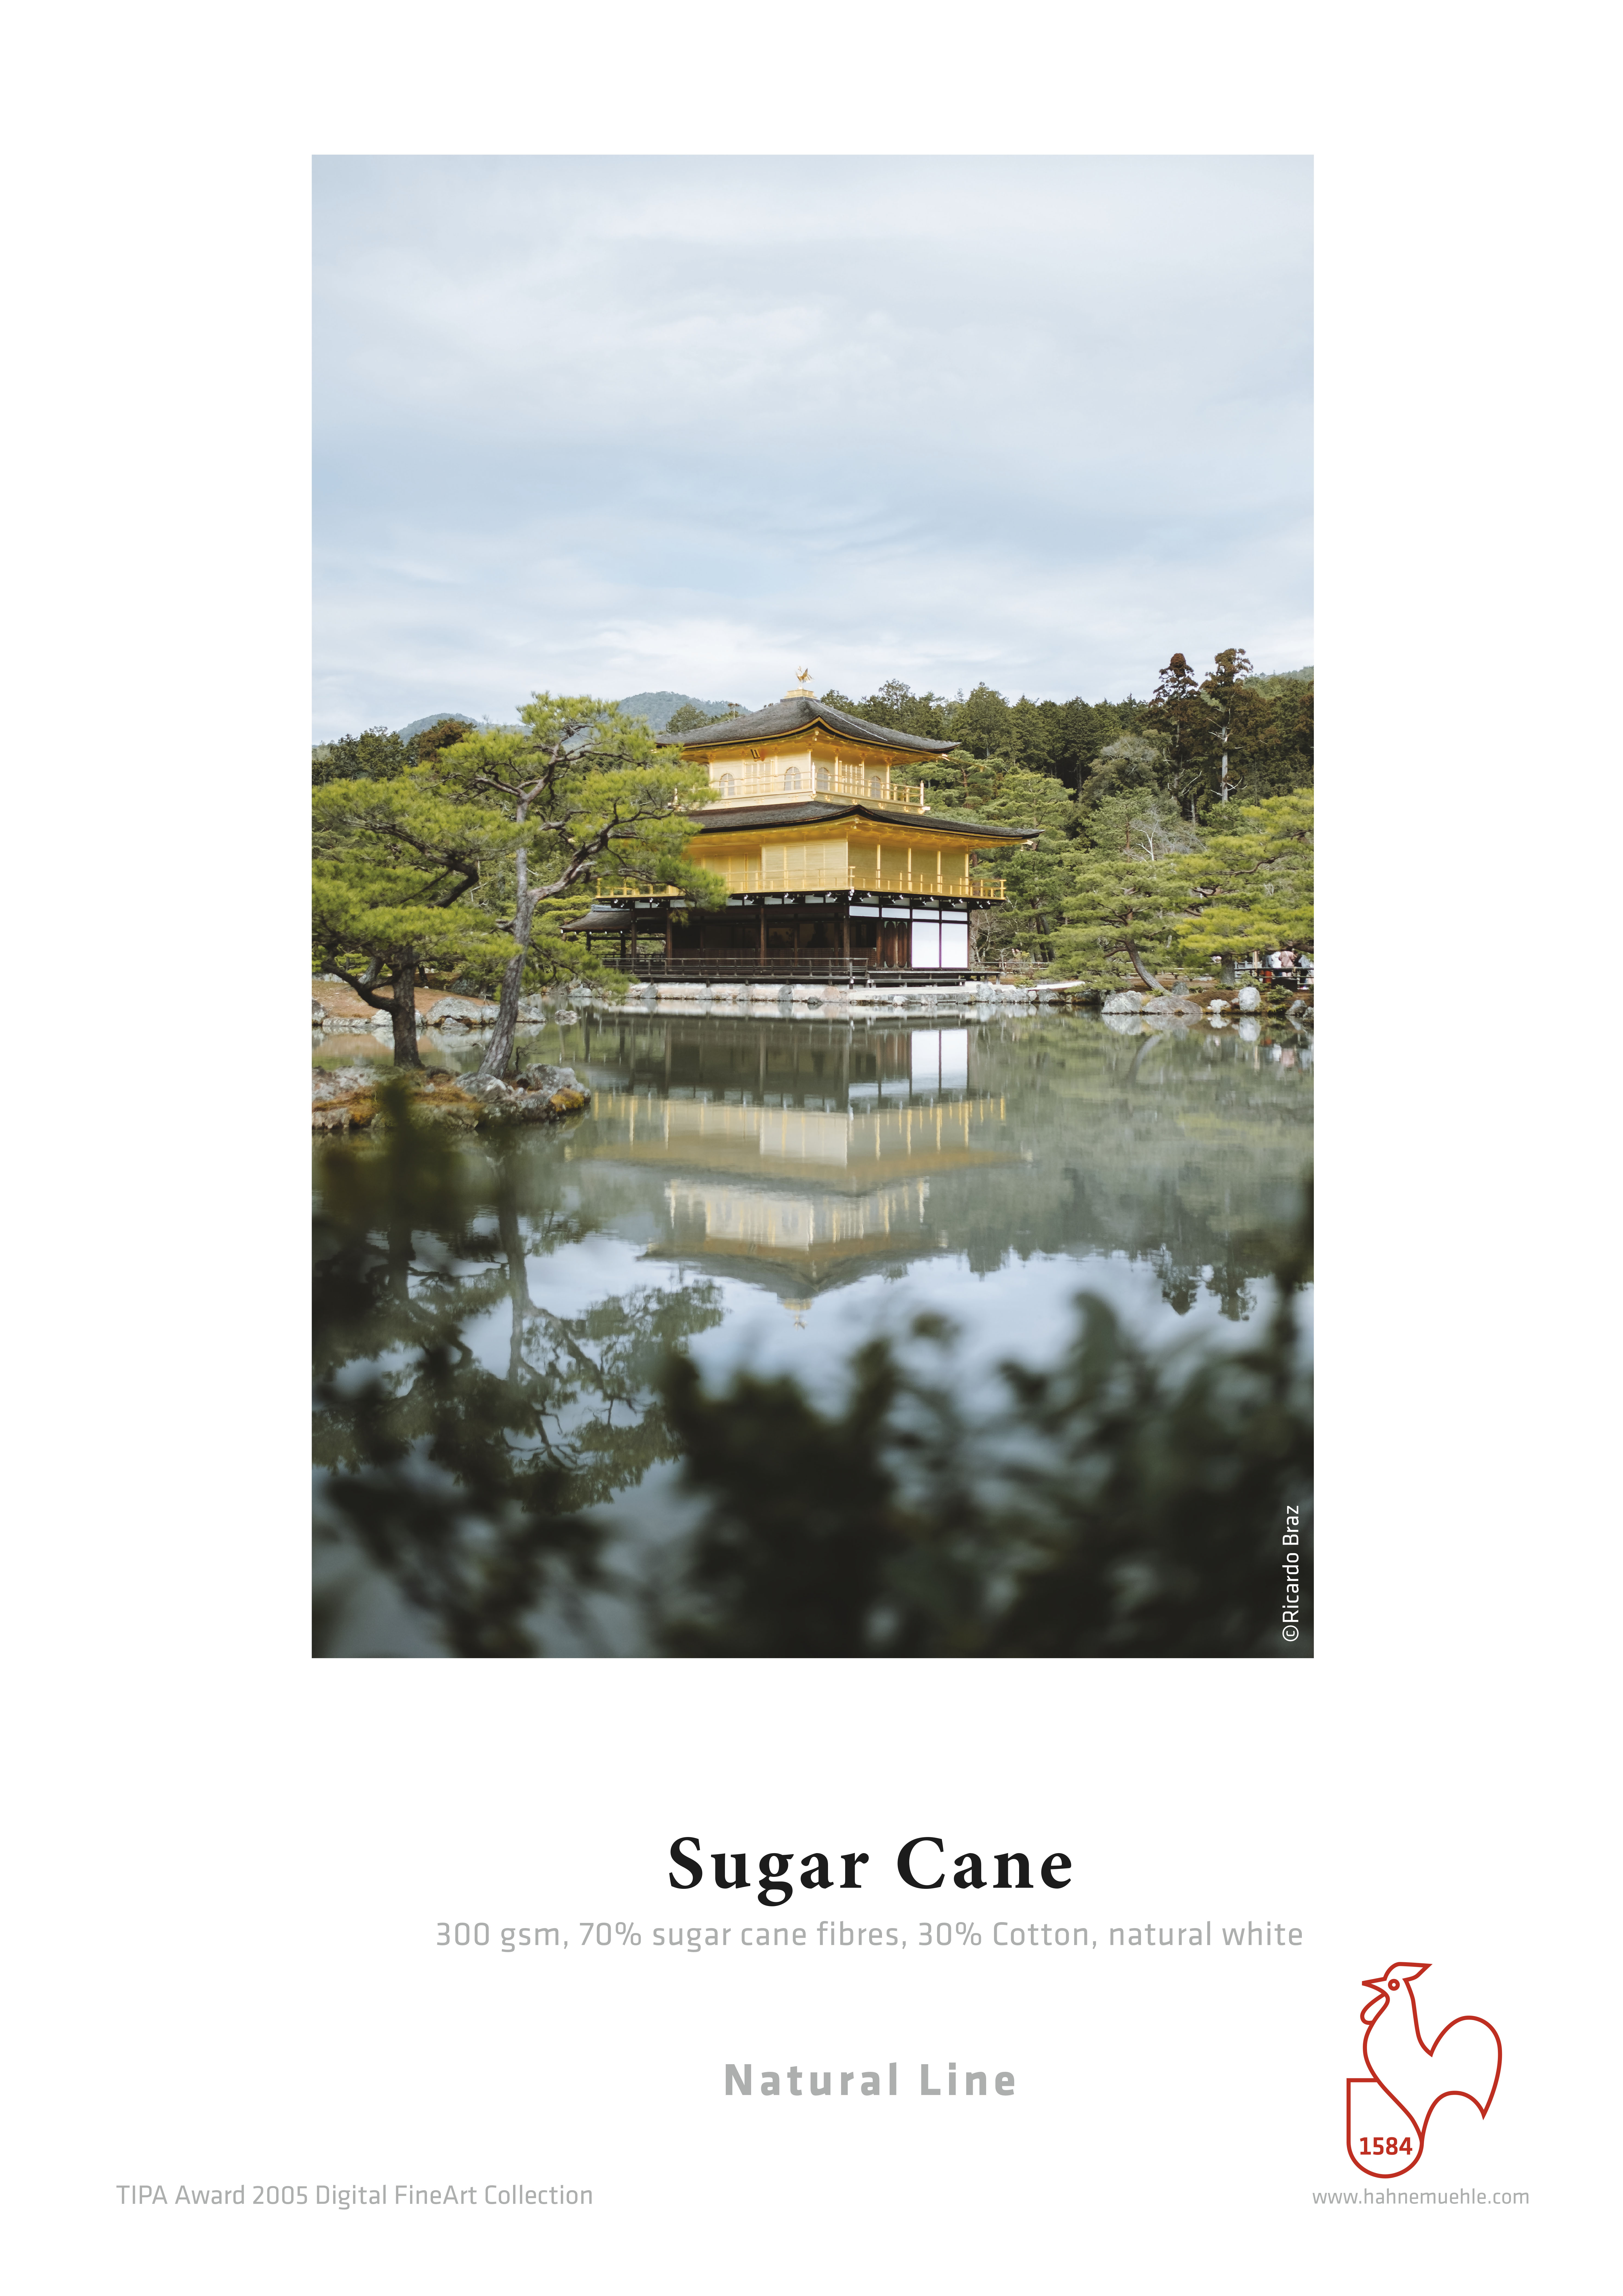 Sample print of Sugar Cane. Printed photo with lake house